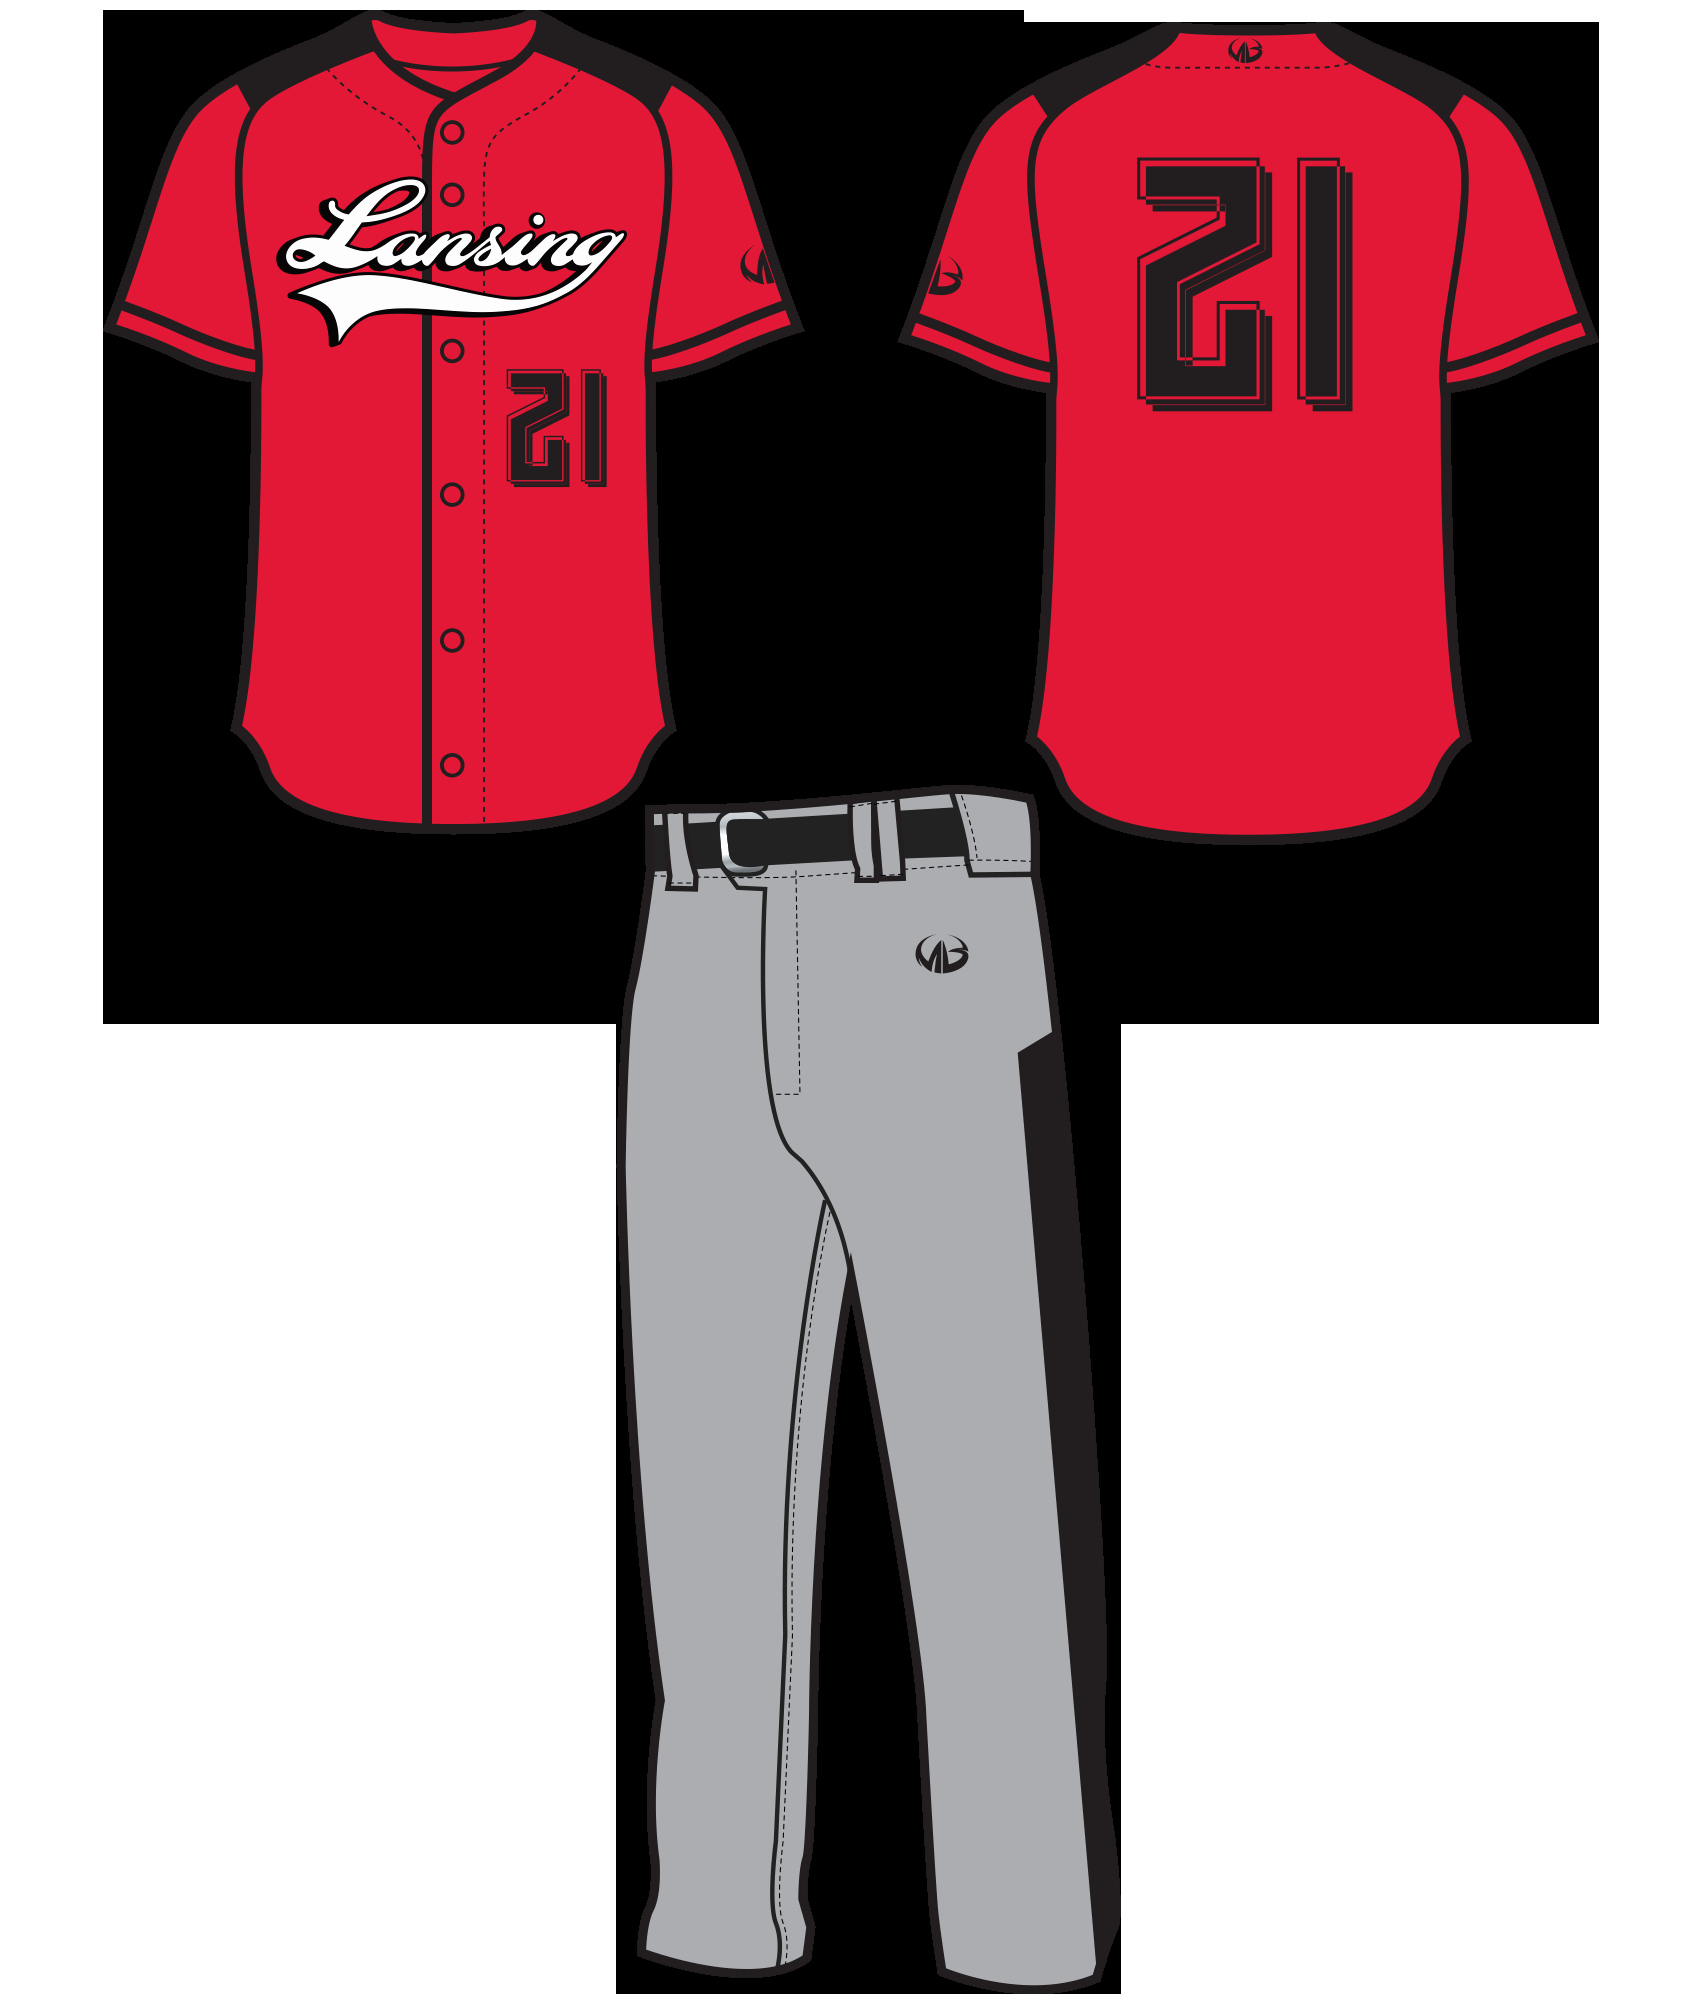 Baseball Uniform order form Template Best Of Custom Baseball Uniforms Customized Uniforms